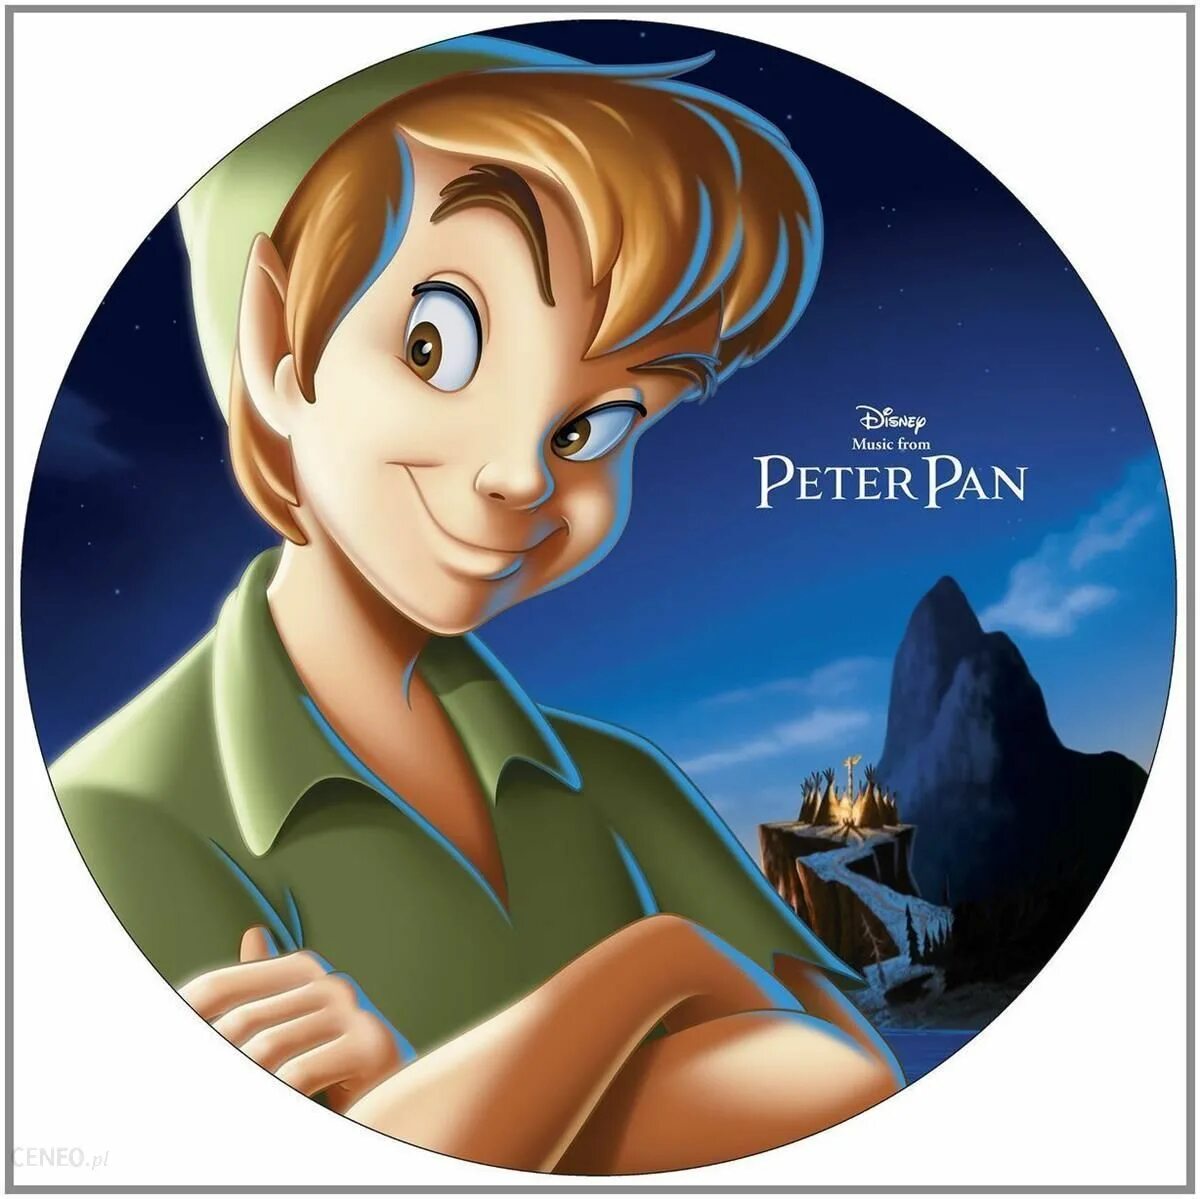 Peter Pan. Peter Pan Musical. Питер Пэн пластинка. Дисней музыка.